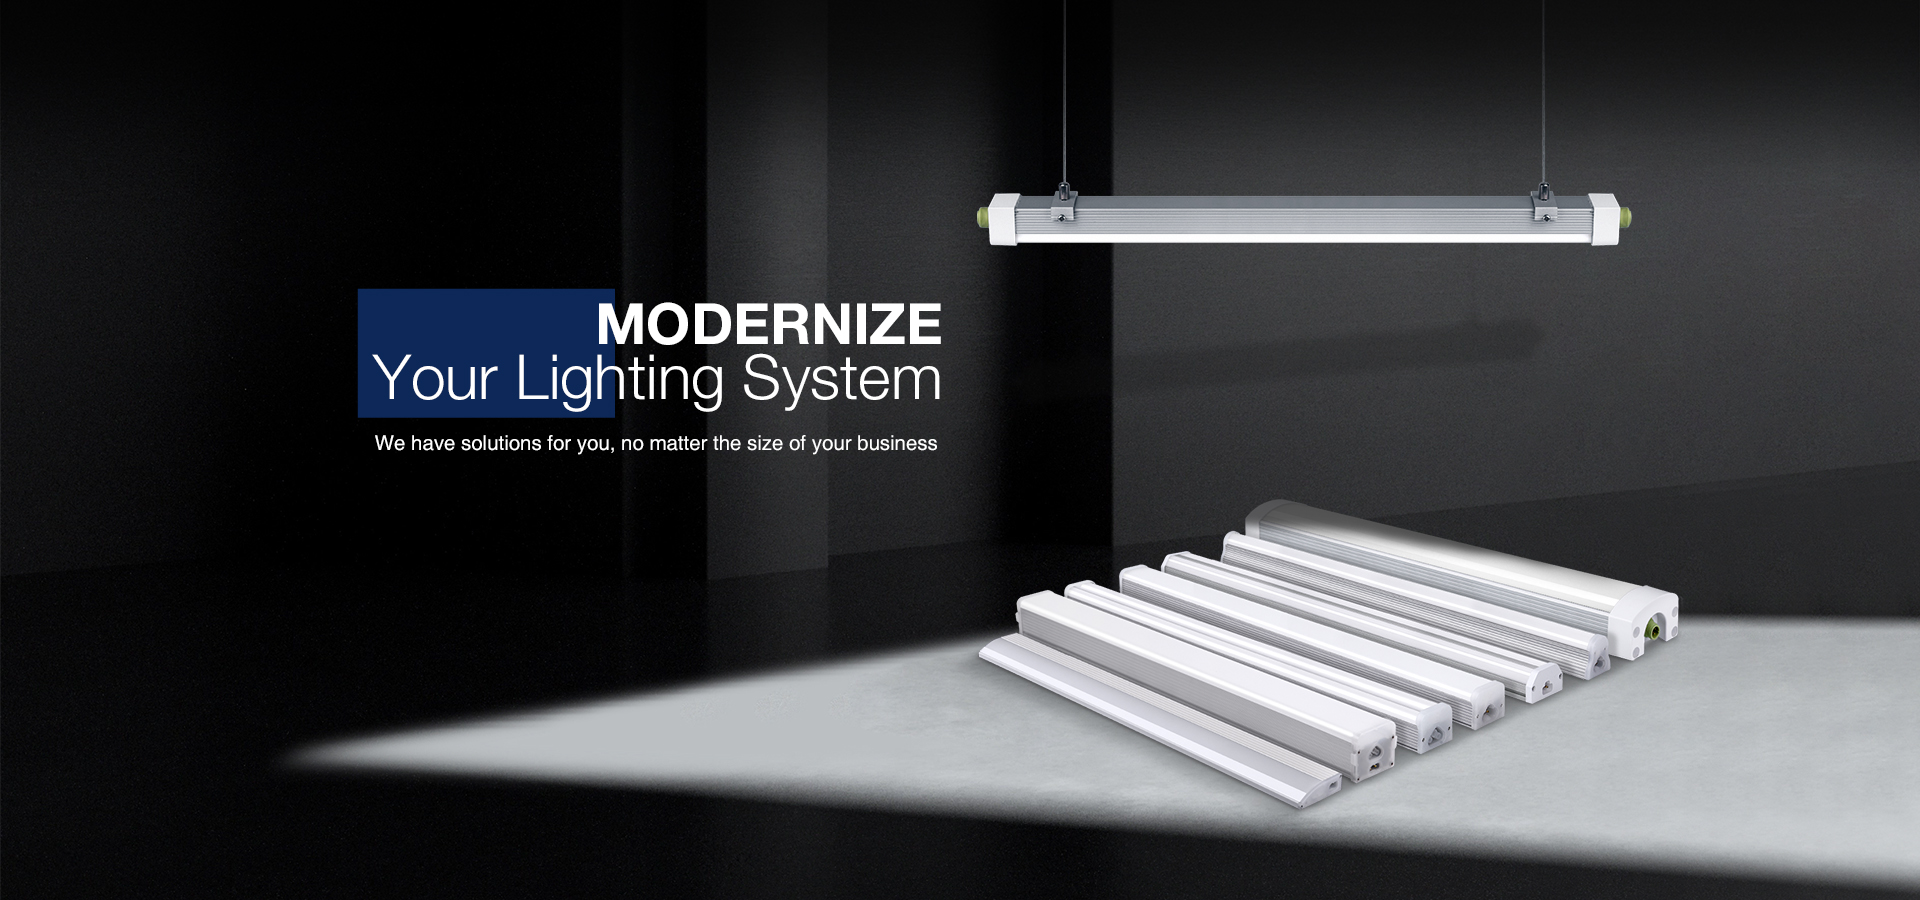 Modernize Your Lighting System